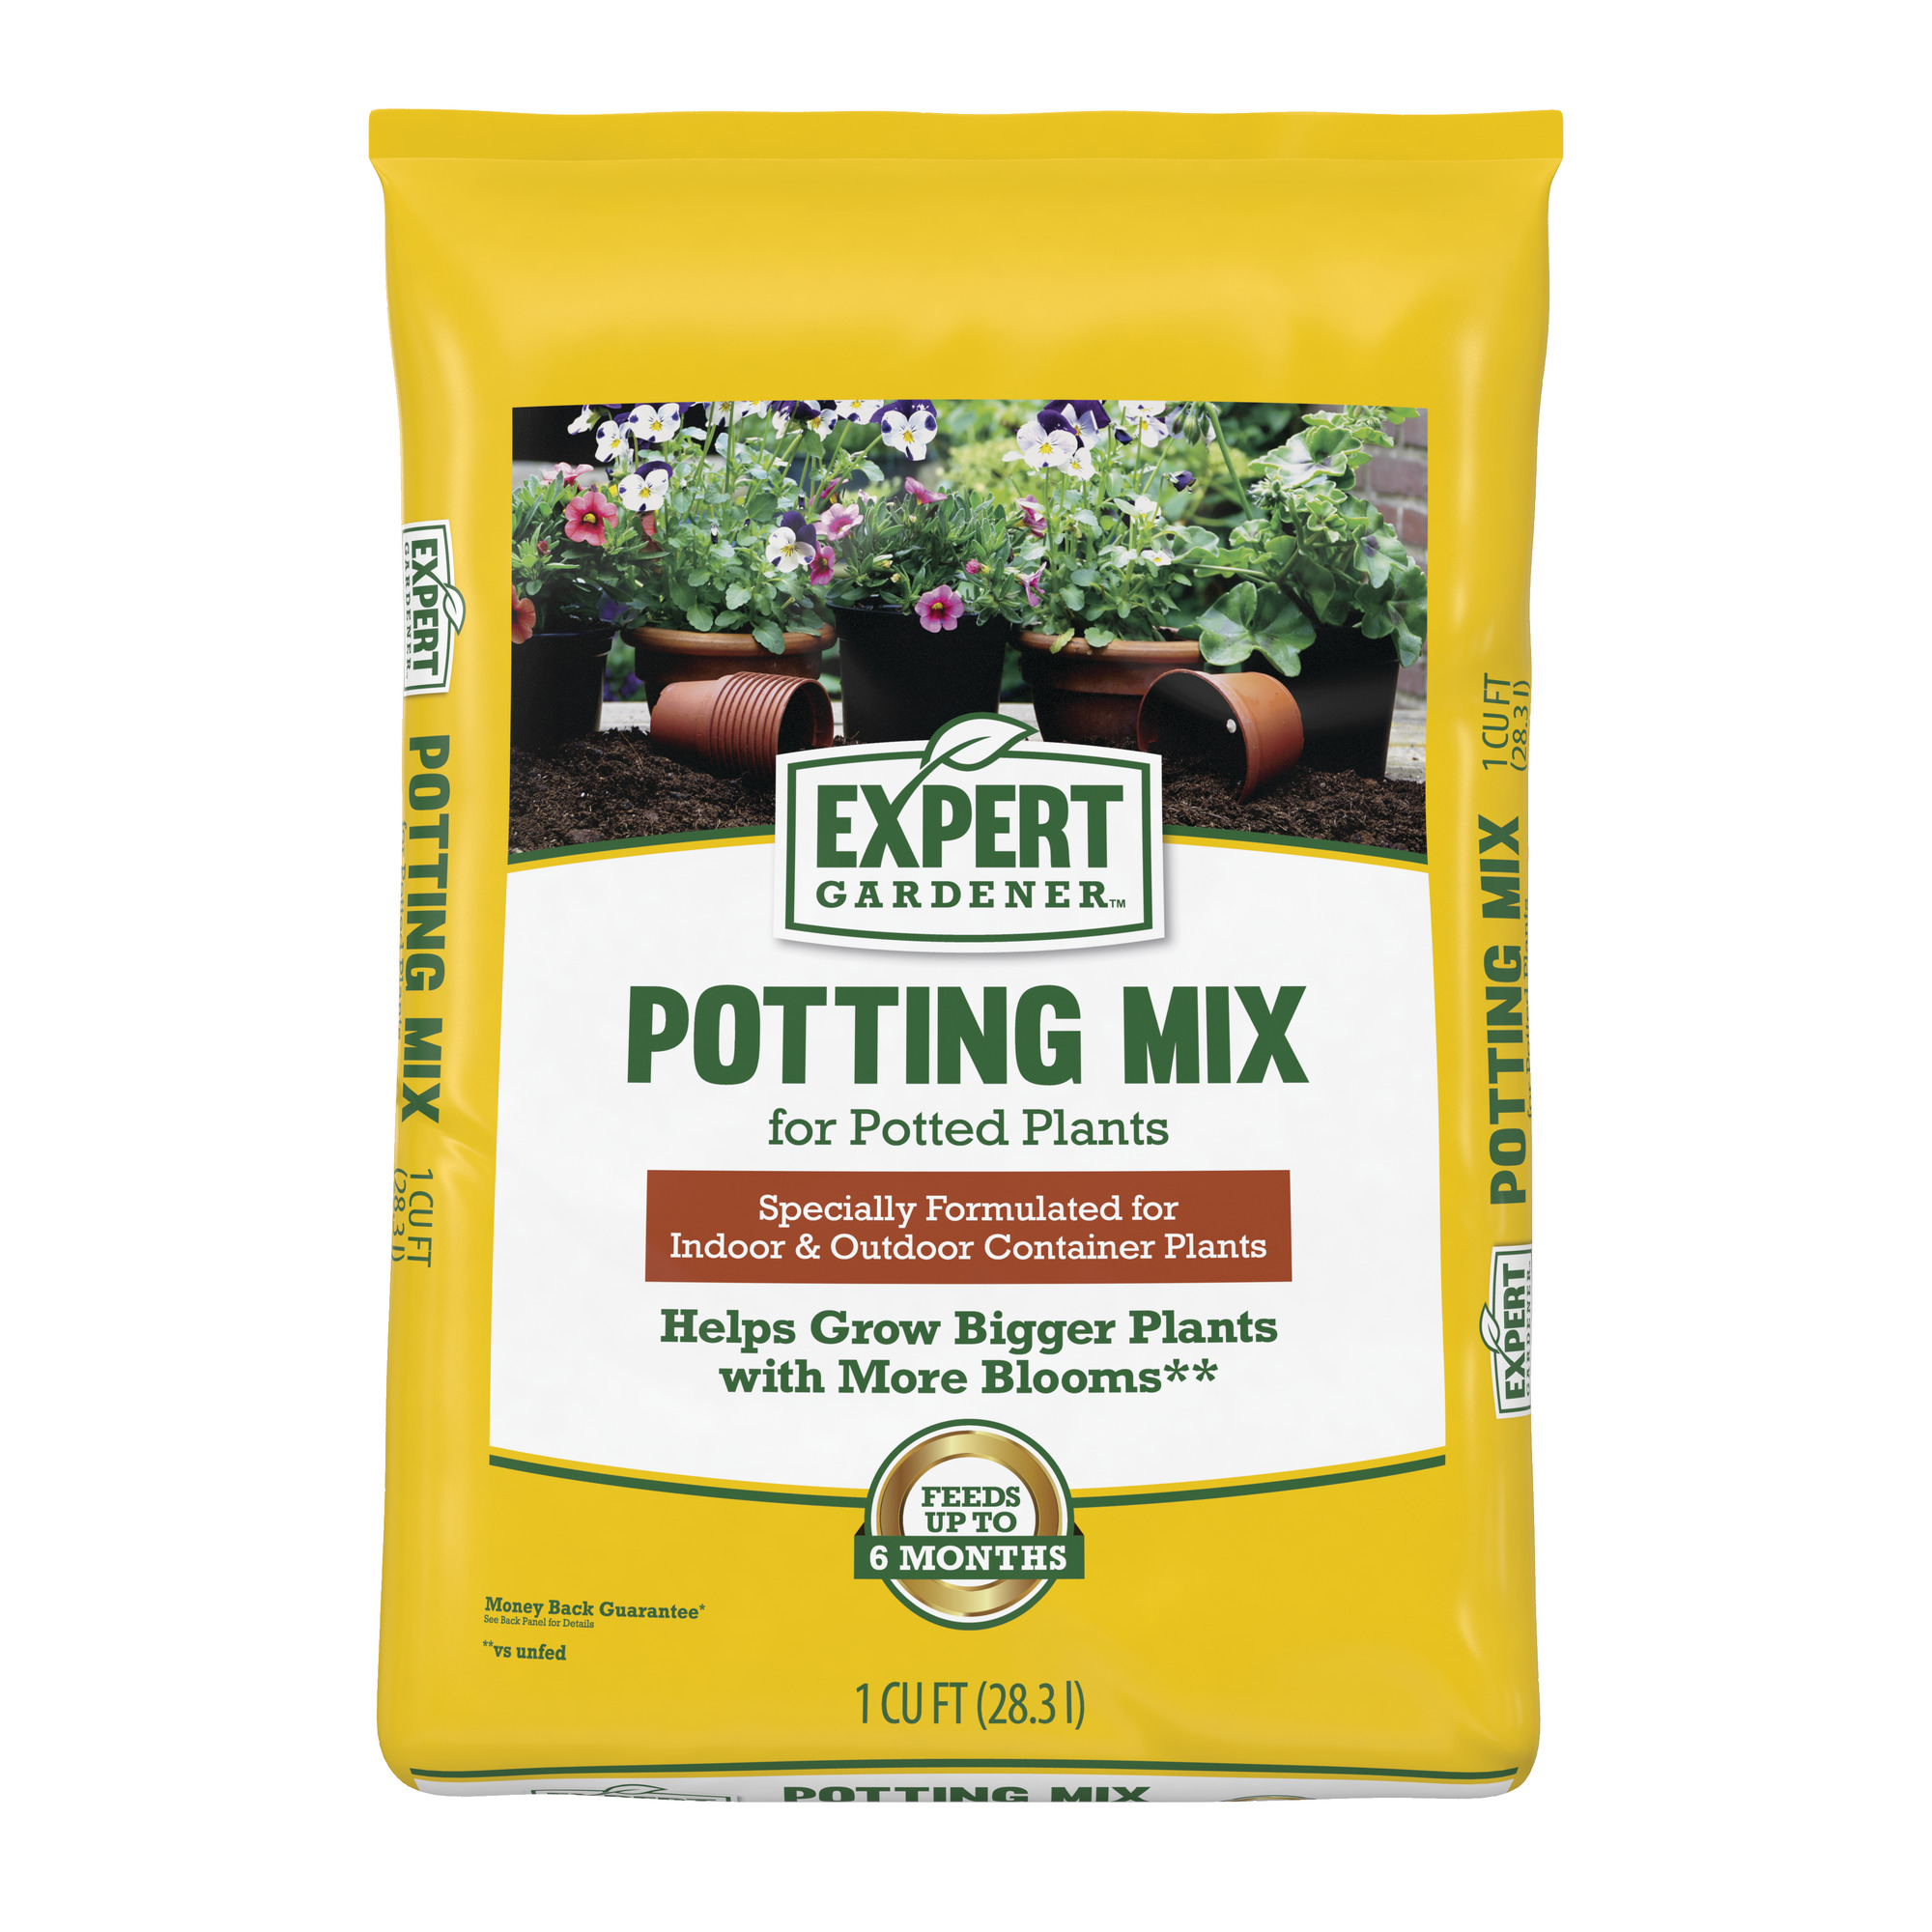 Expert Gardener Potting Mix for Indoor & Outdoor Potted Plants, 1 cu ft - image 1 of 7